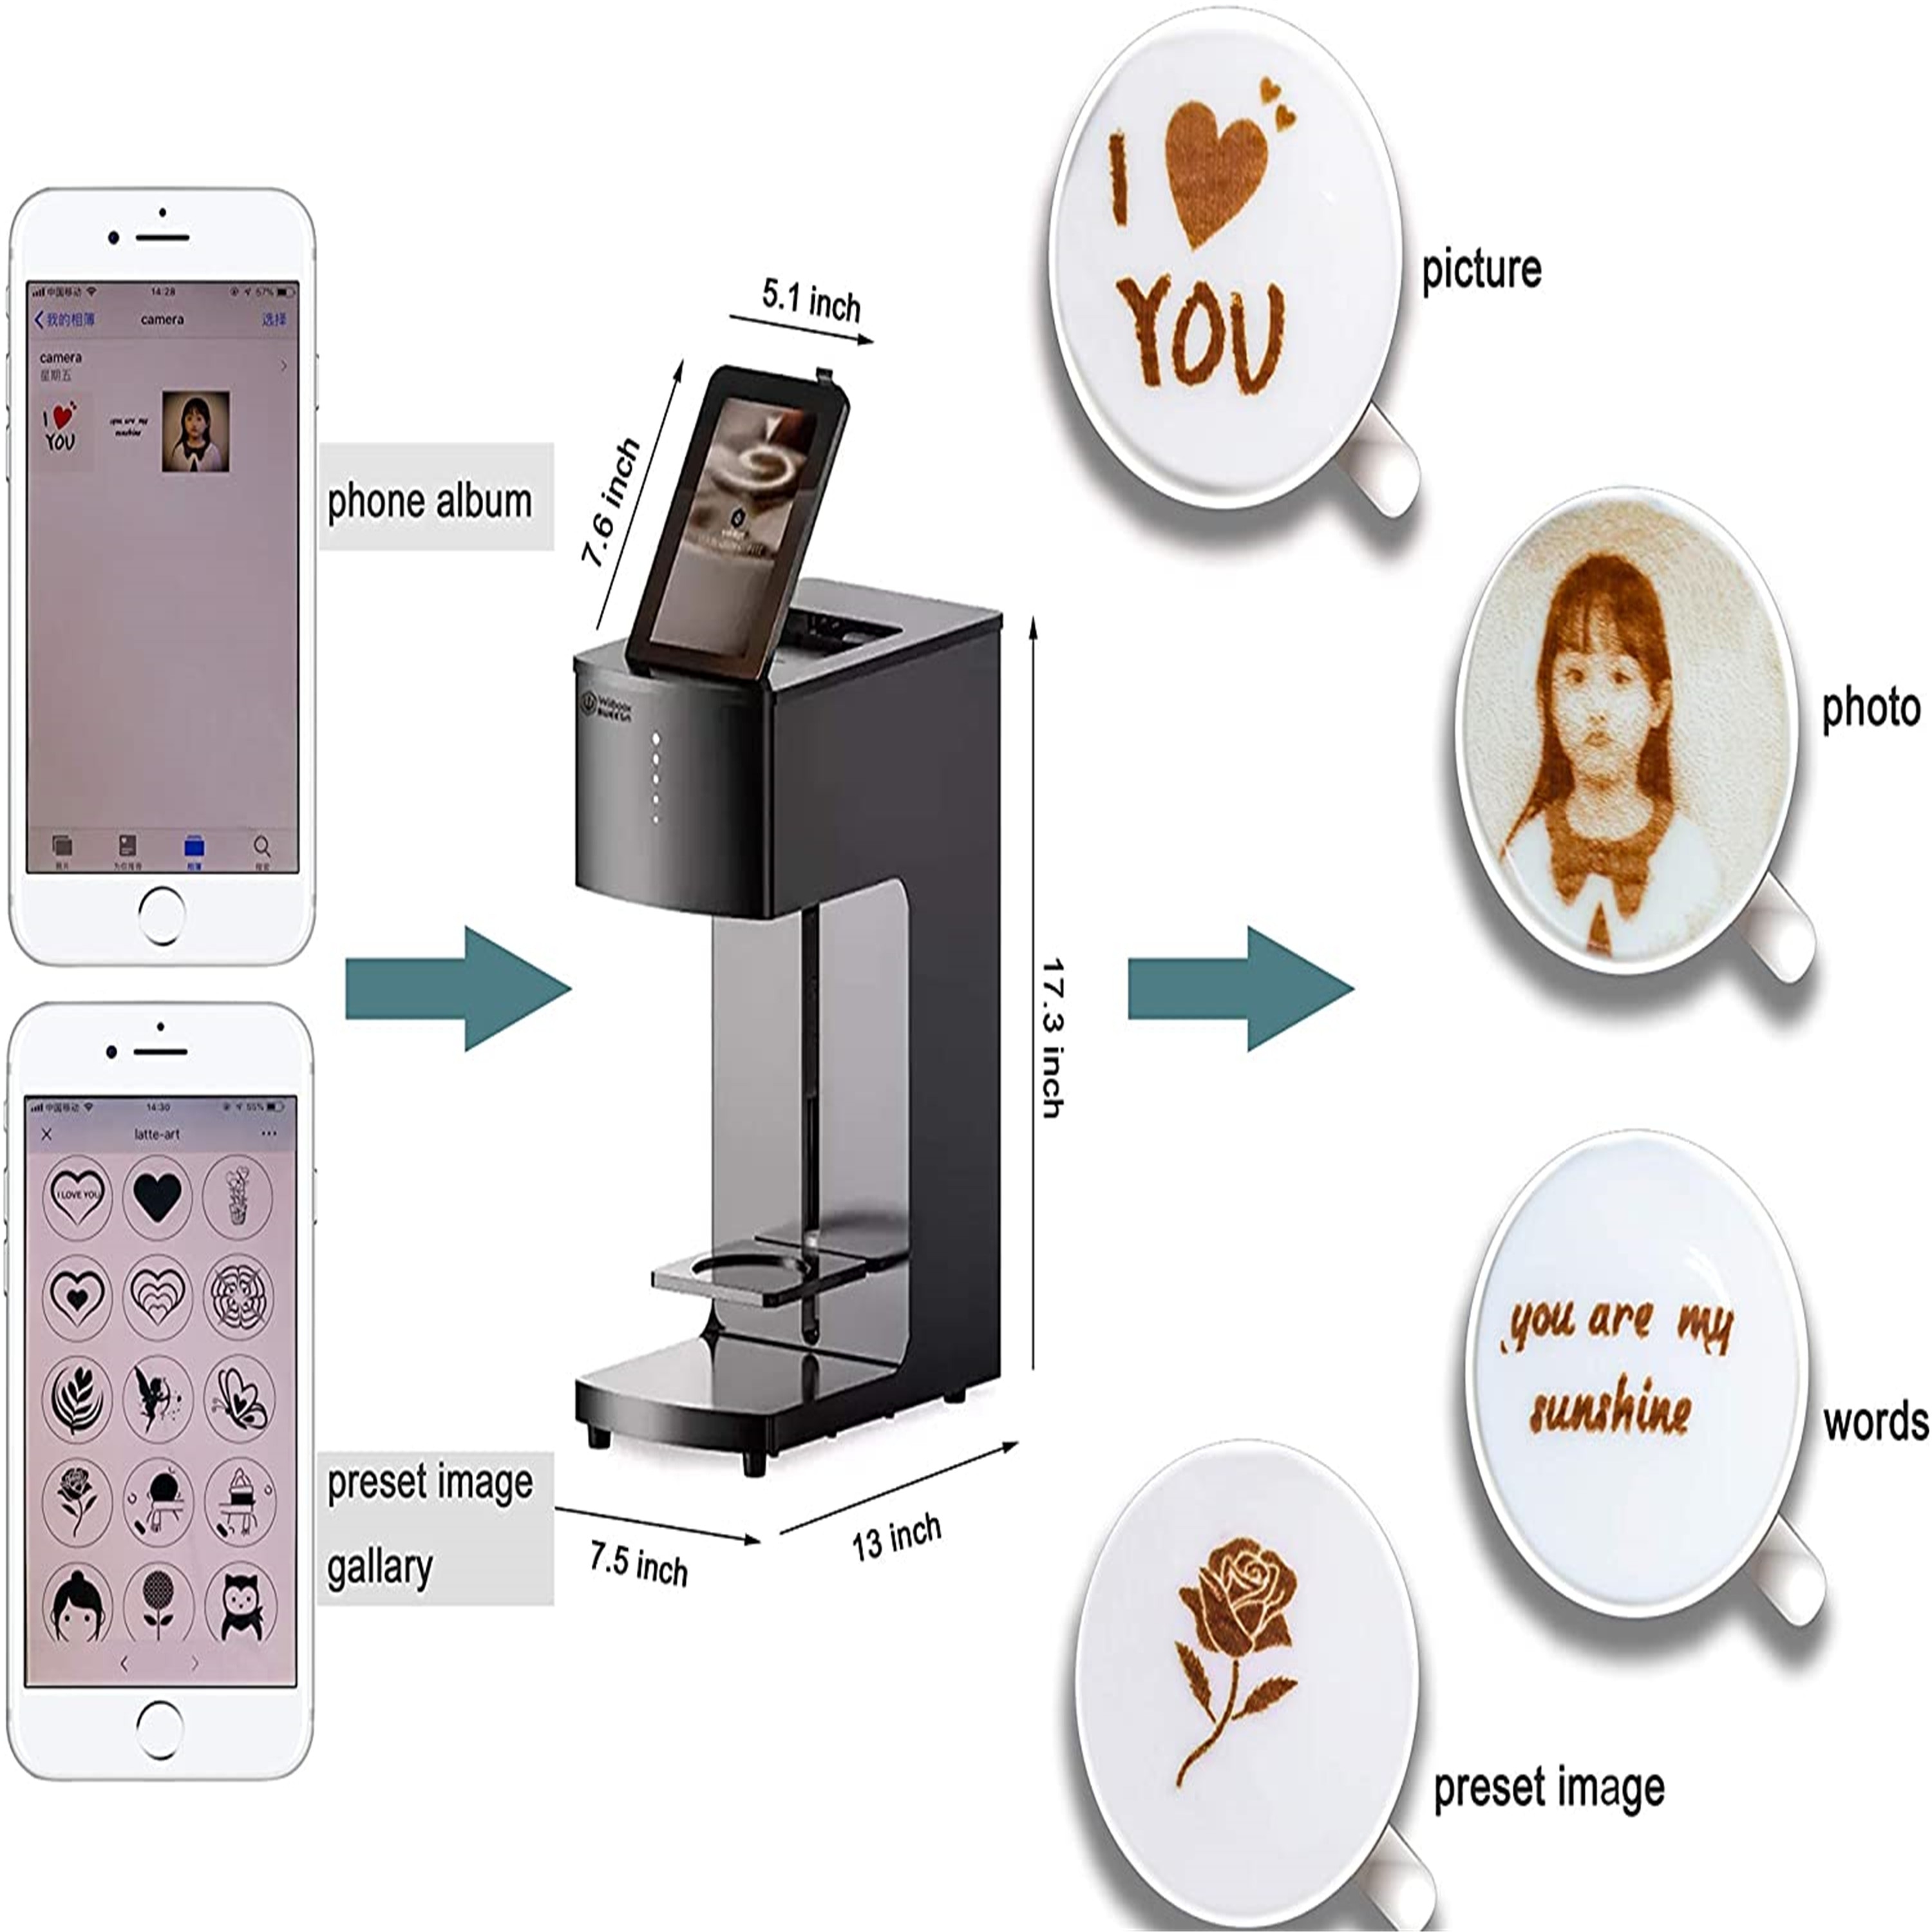 Mini Protable Handheld Inkjet Printer Food Printer Coffee Printer Latte Art  Printer Food Machine PrintPen in Bread Cake 